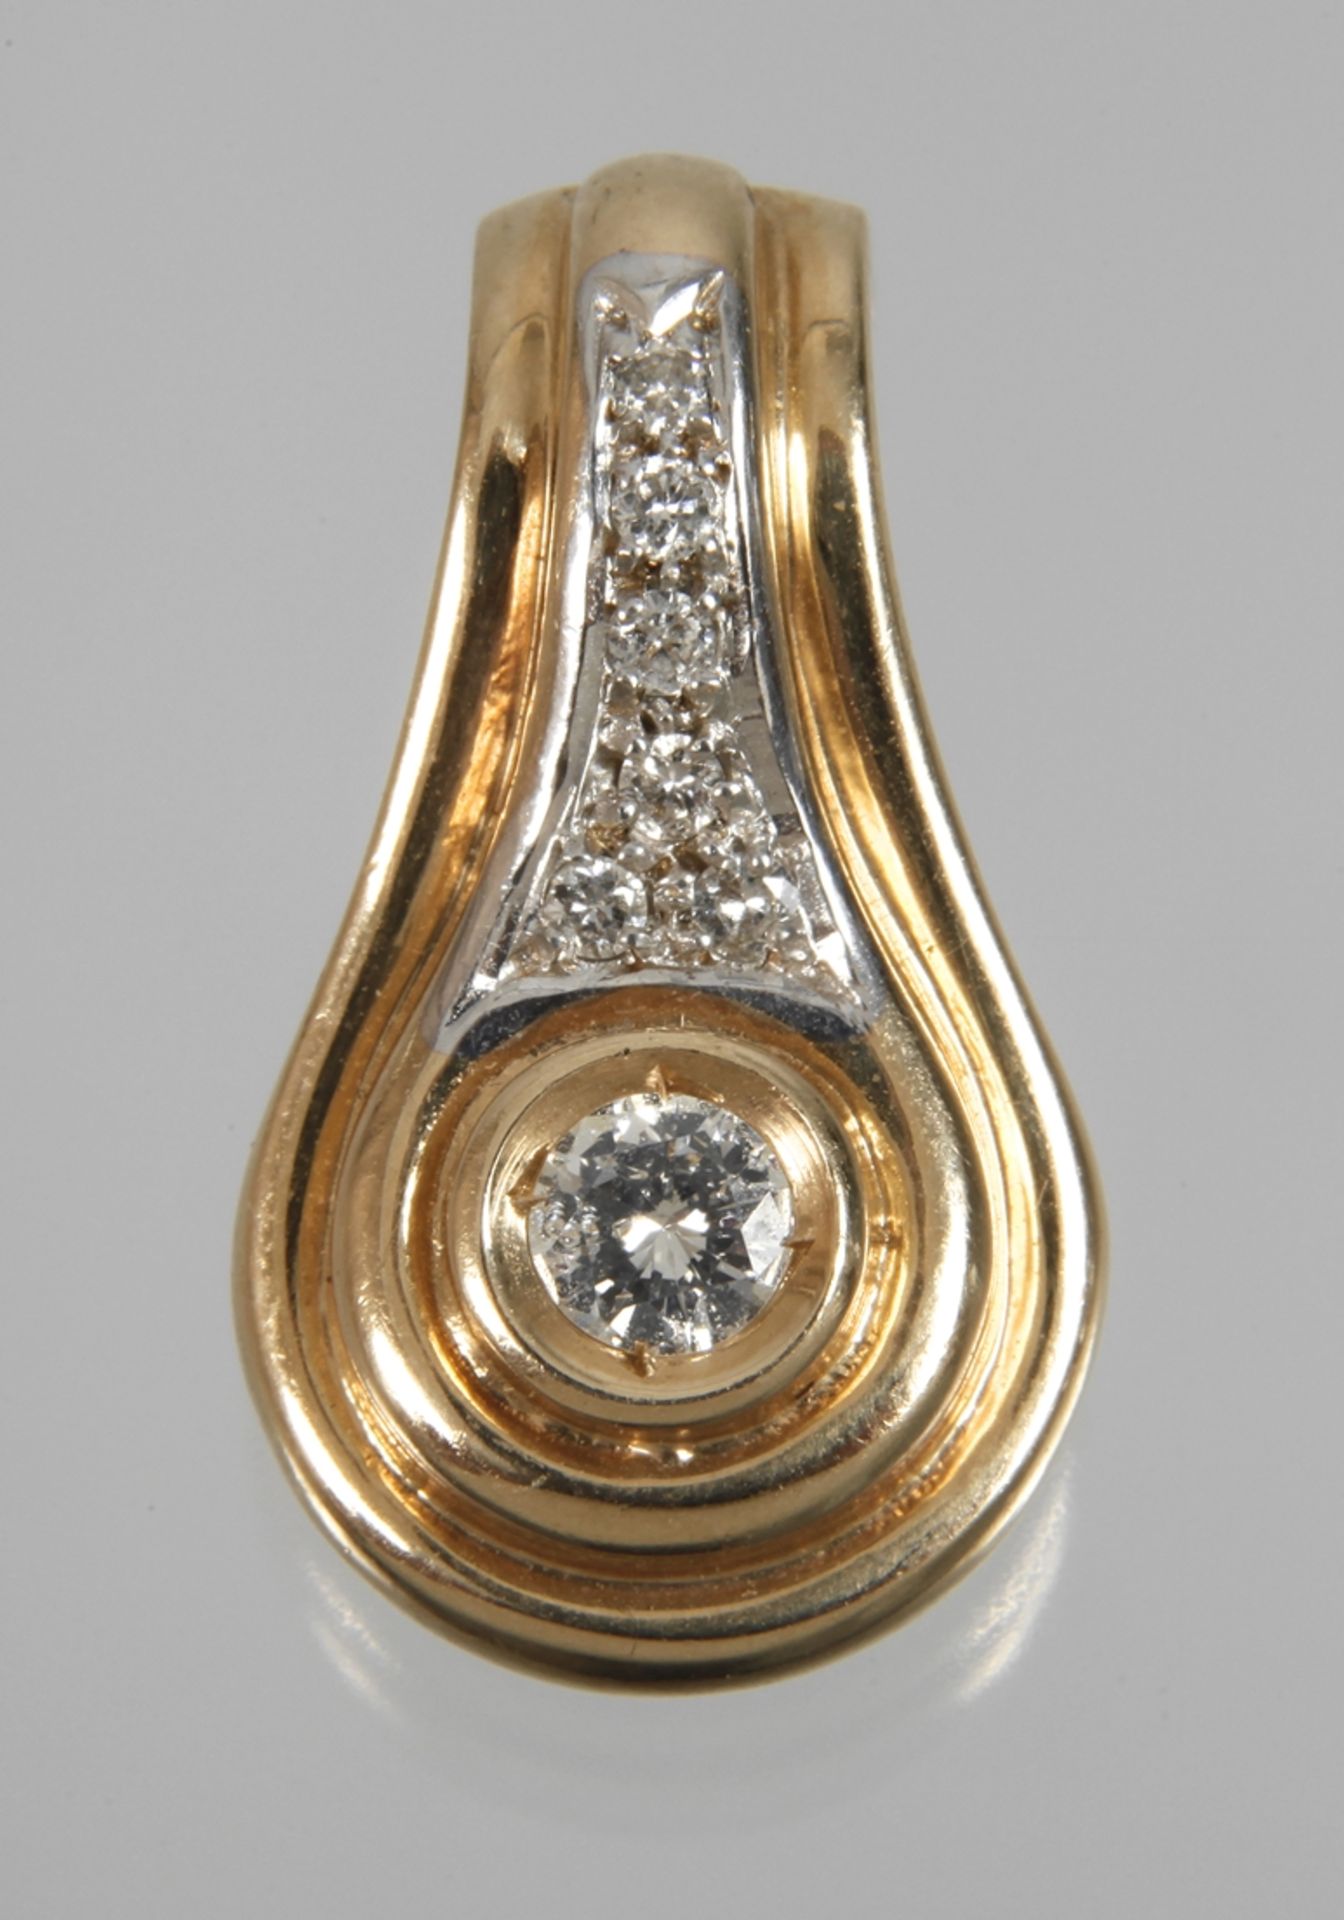 Clip pendant with brilliant-cut diamonds